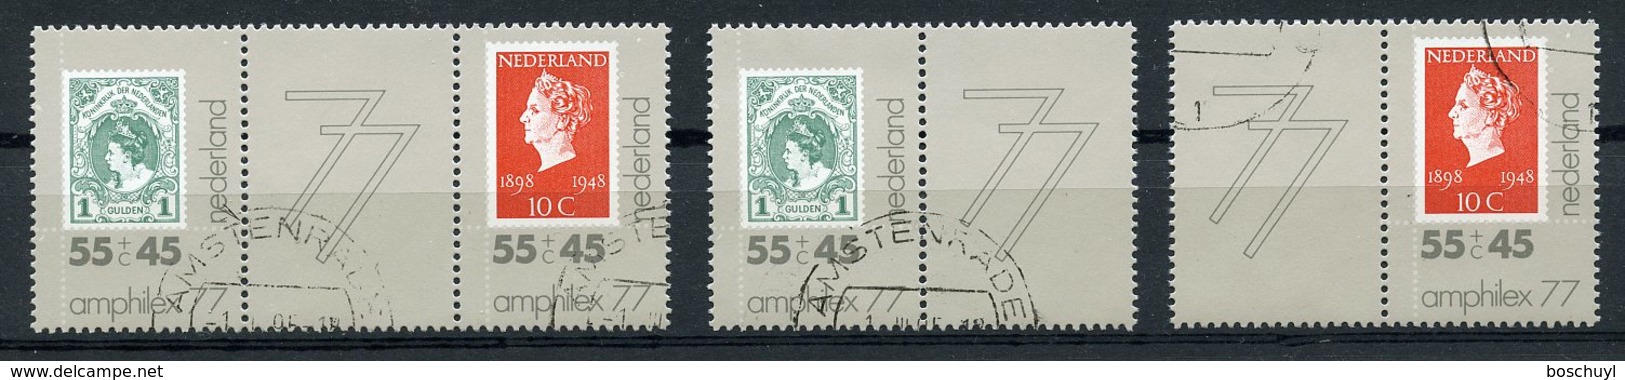 Netherlands, 1977, Amphilex Stamp Exhibition, Combinations From Sheet, Used, Michel 1101, 1104 - Gebruikt